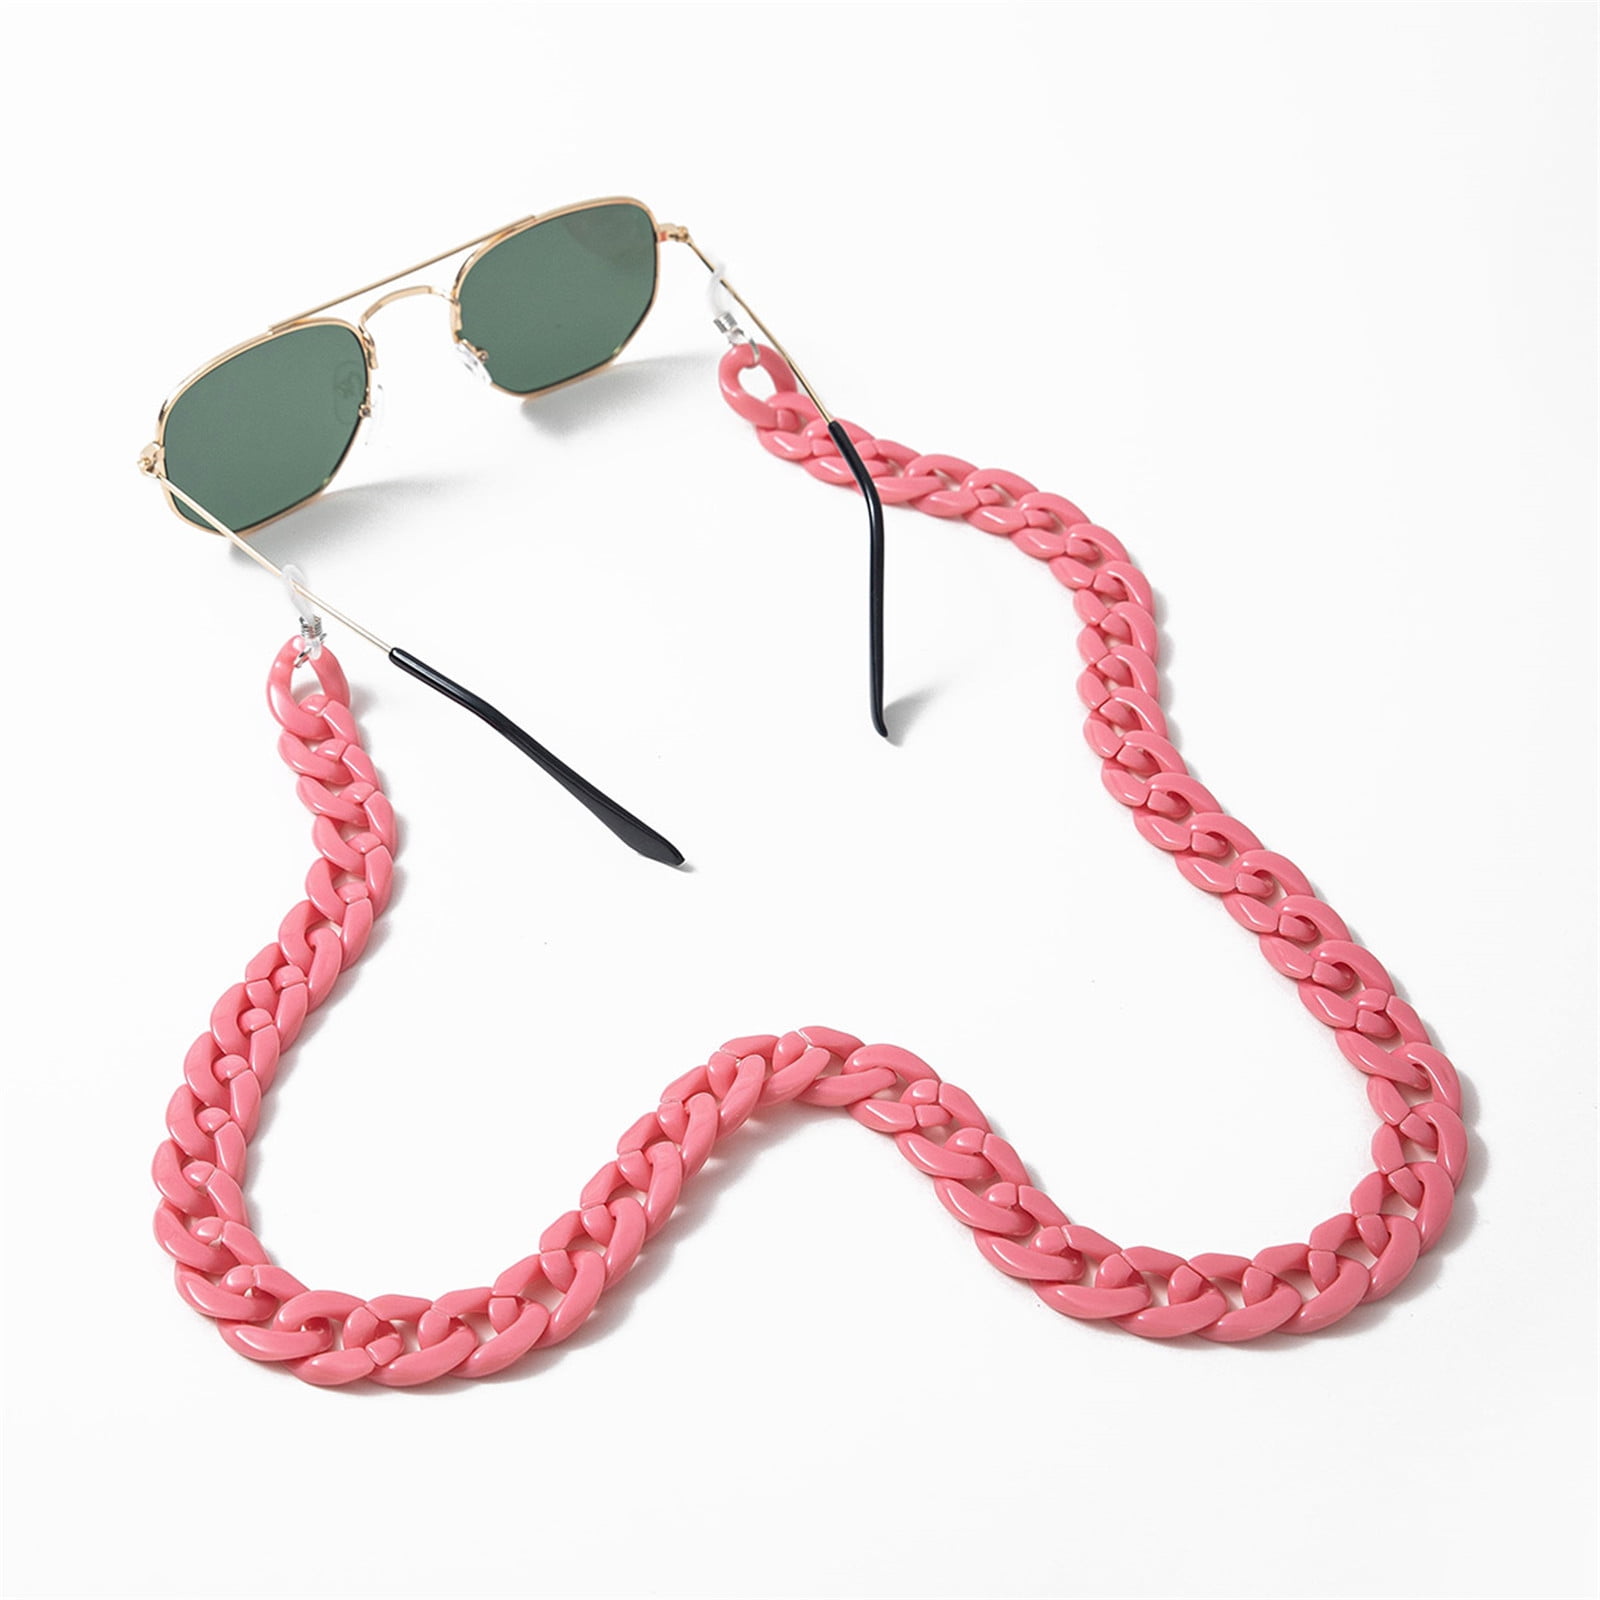 Acrylic Glasses Necklace  Eyeglass Lanyard  Glasses Chain Eye wear Accessories 